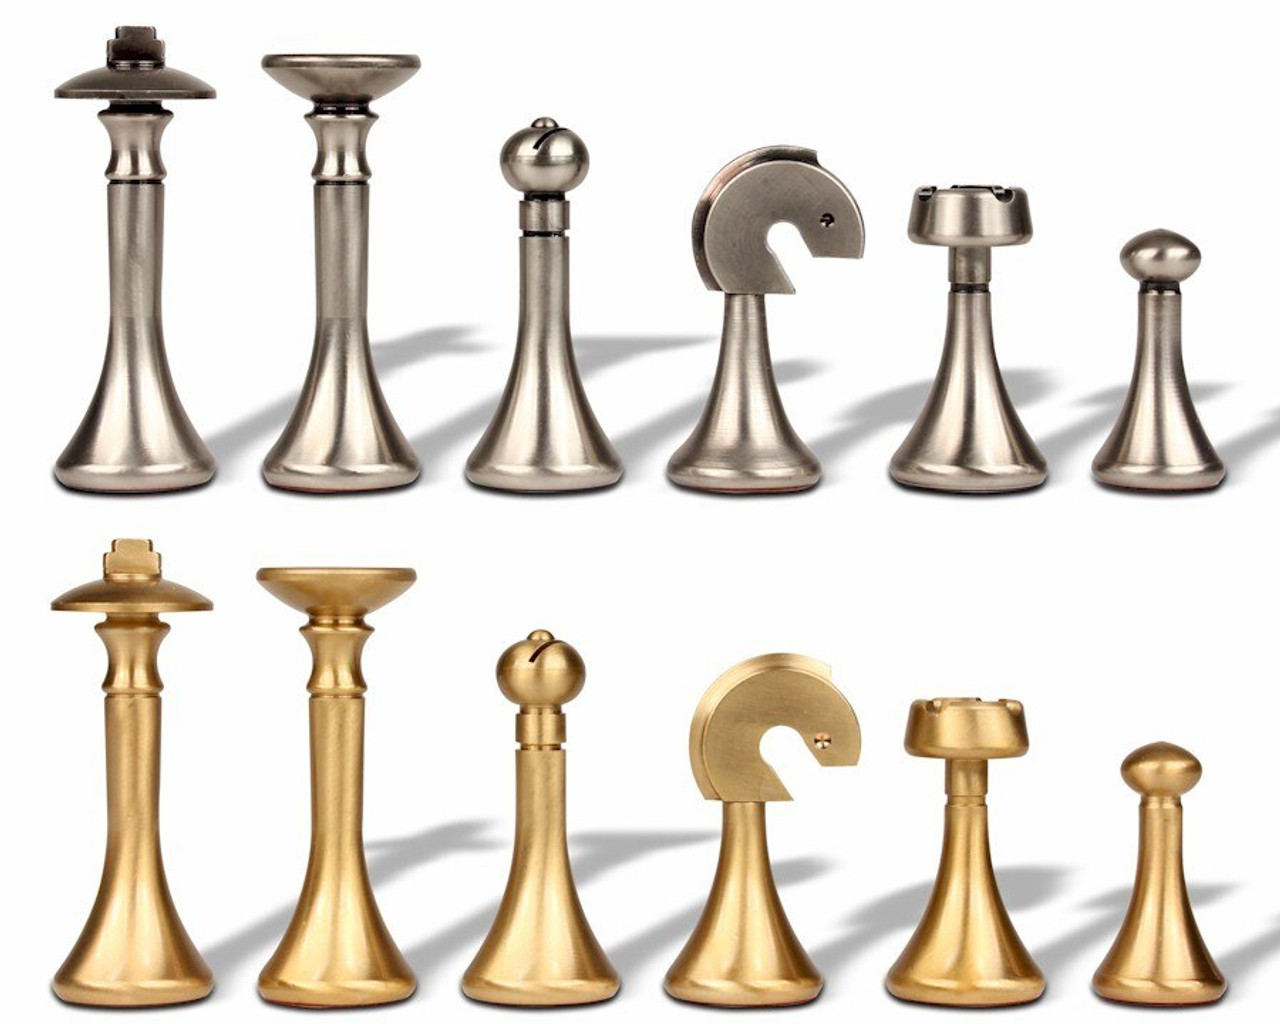 Small Solid Brass Staunton Chess Set by Italfama